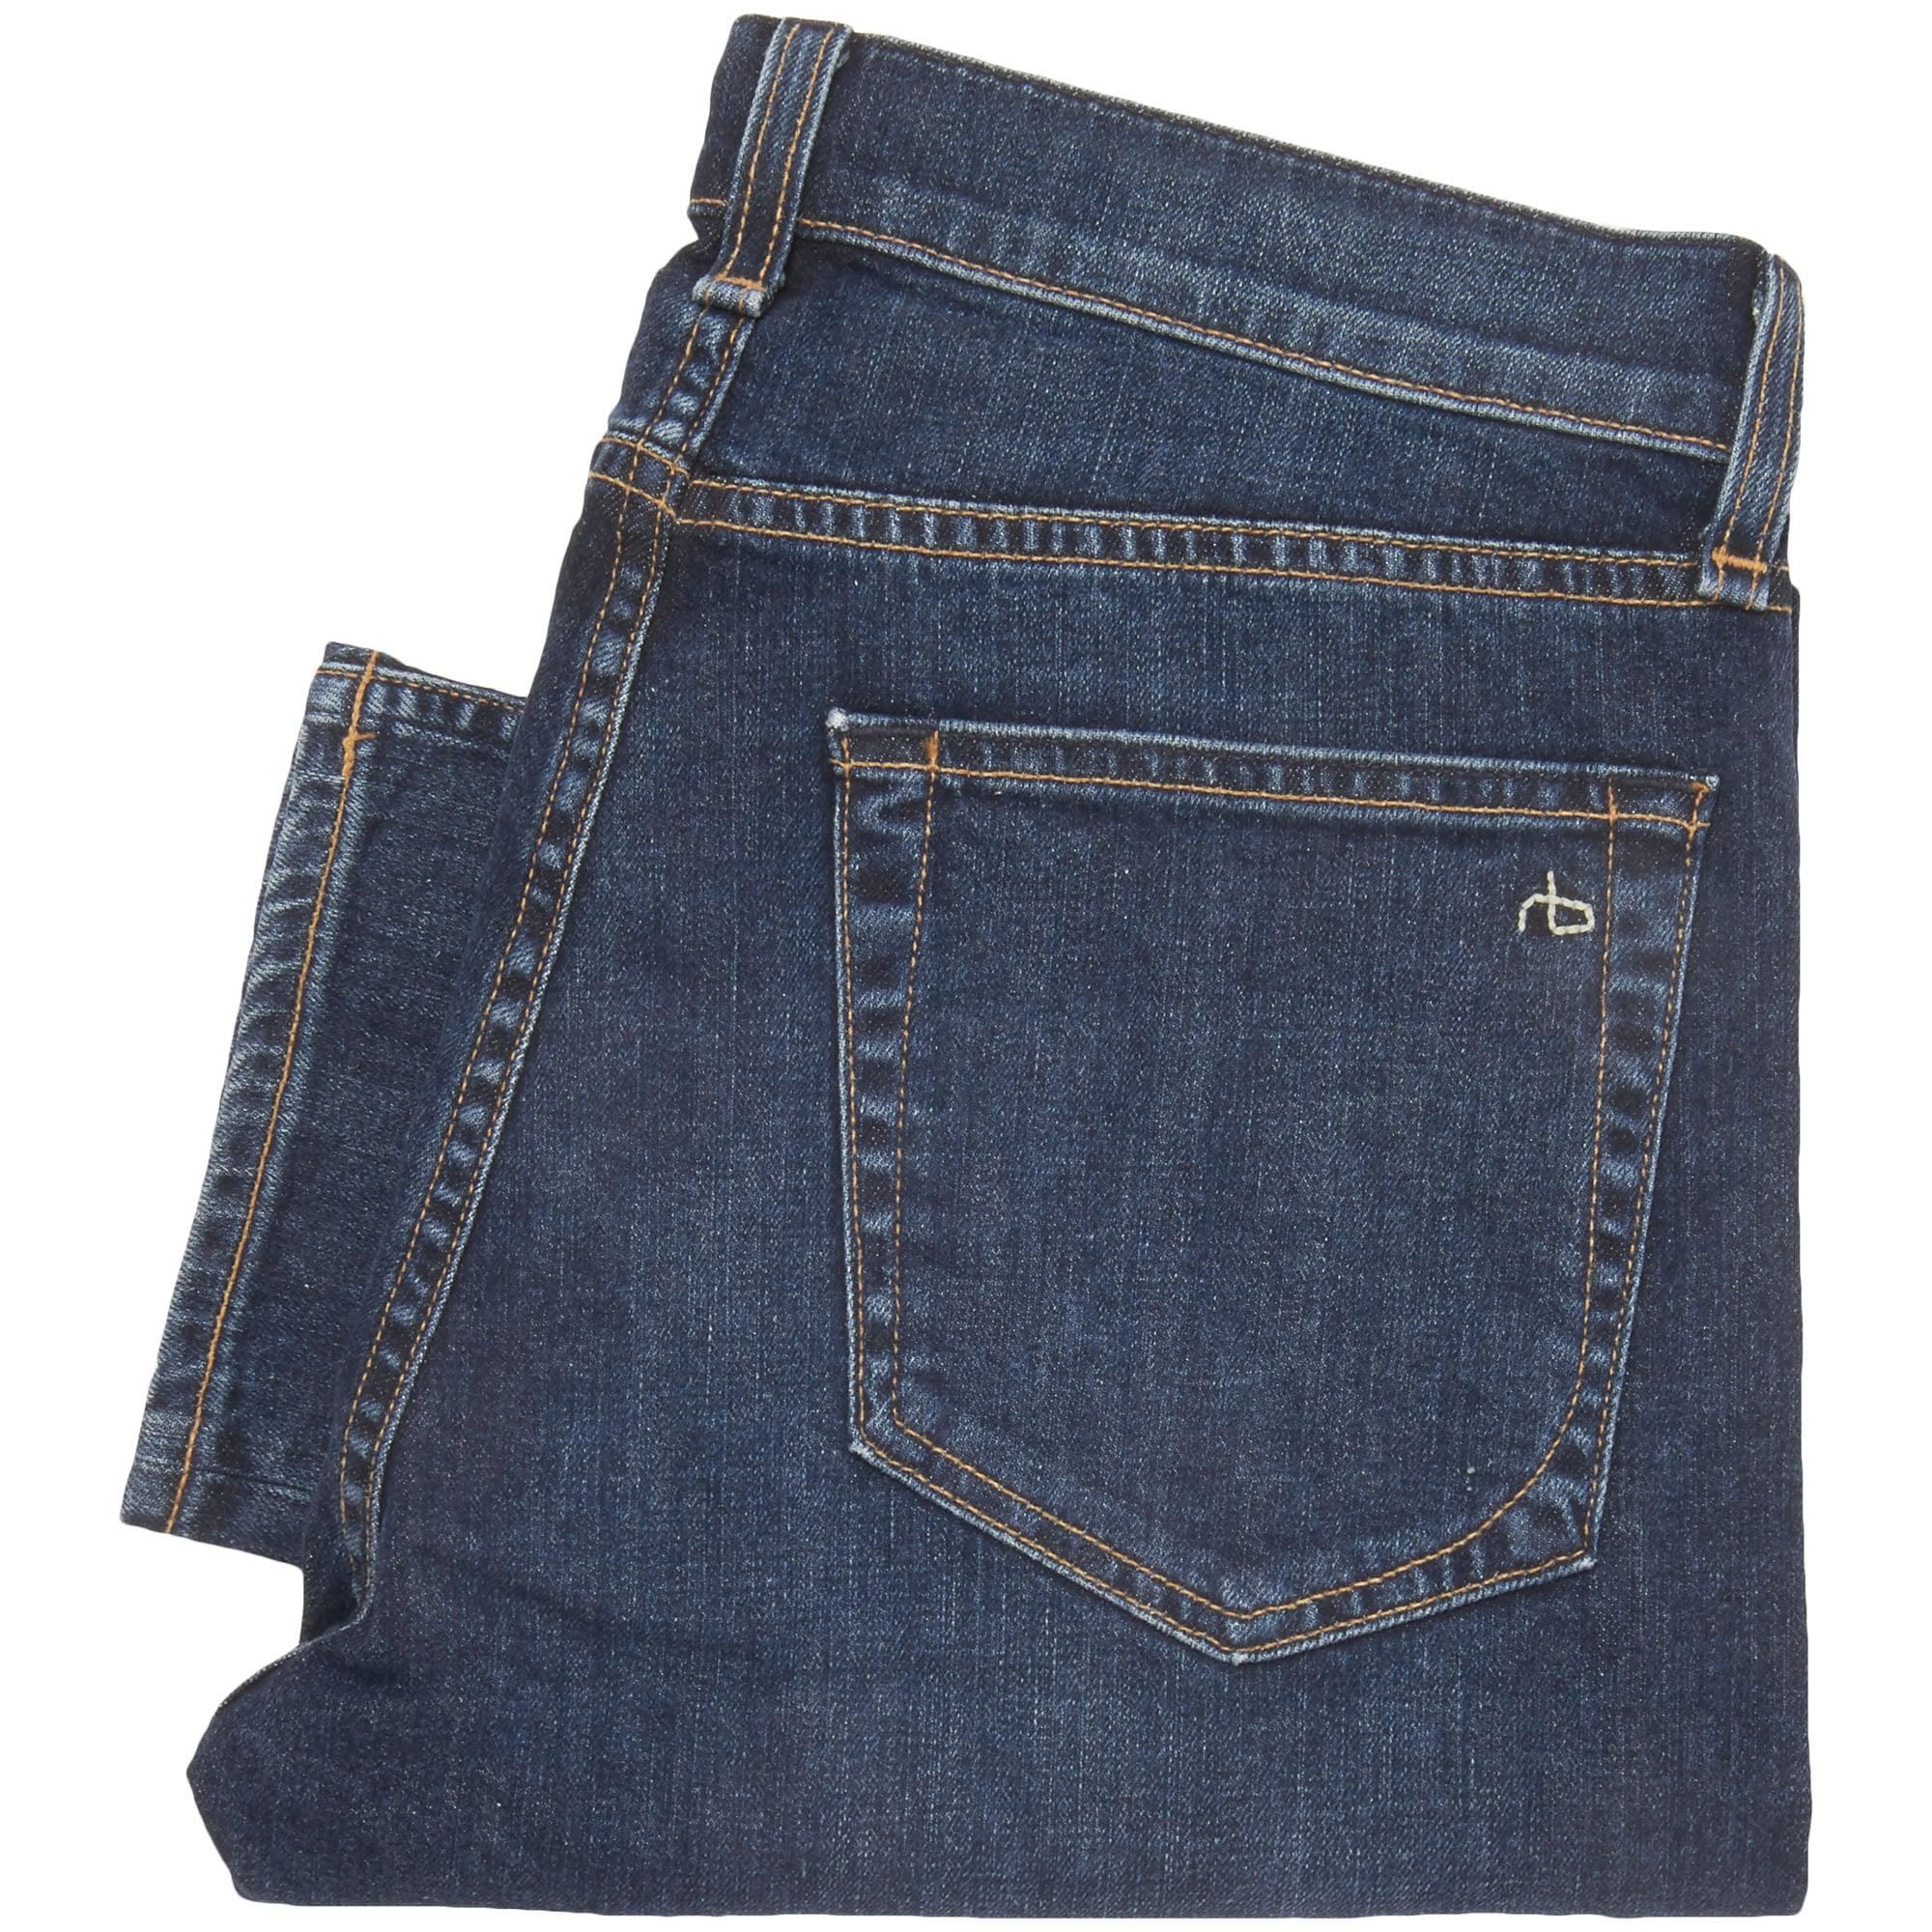 Lyst - Rag & Bone Fit 2 Slim Fit Denim Jeans in Blue for Men